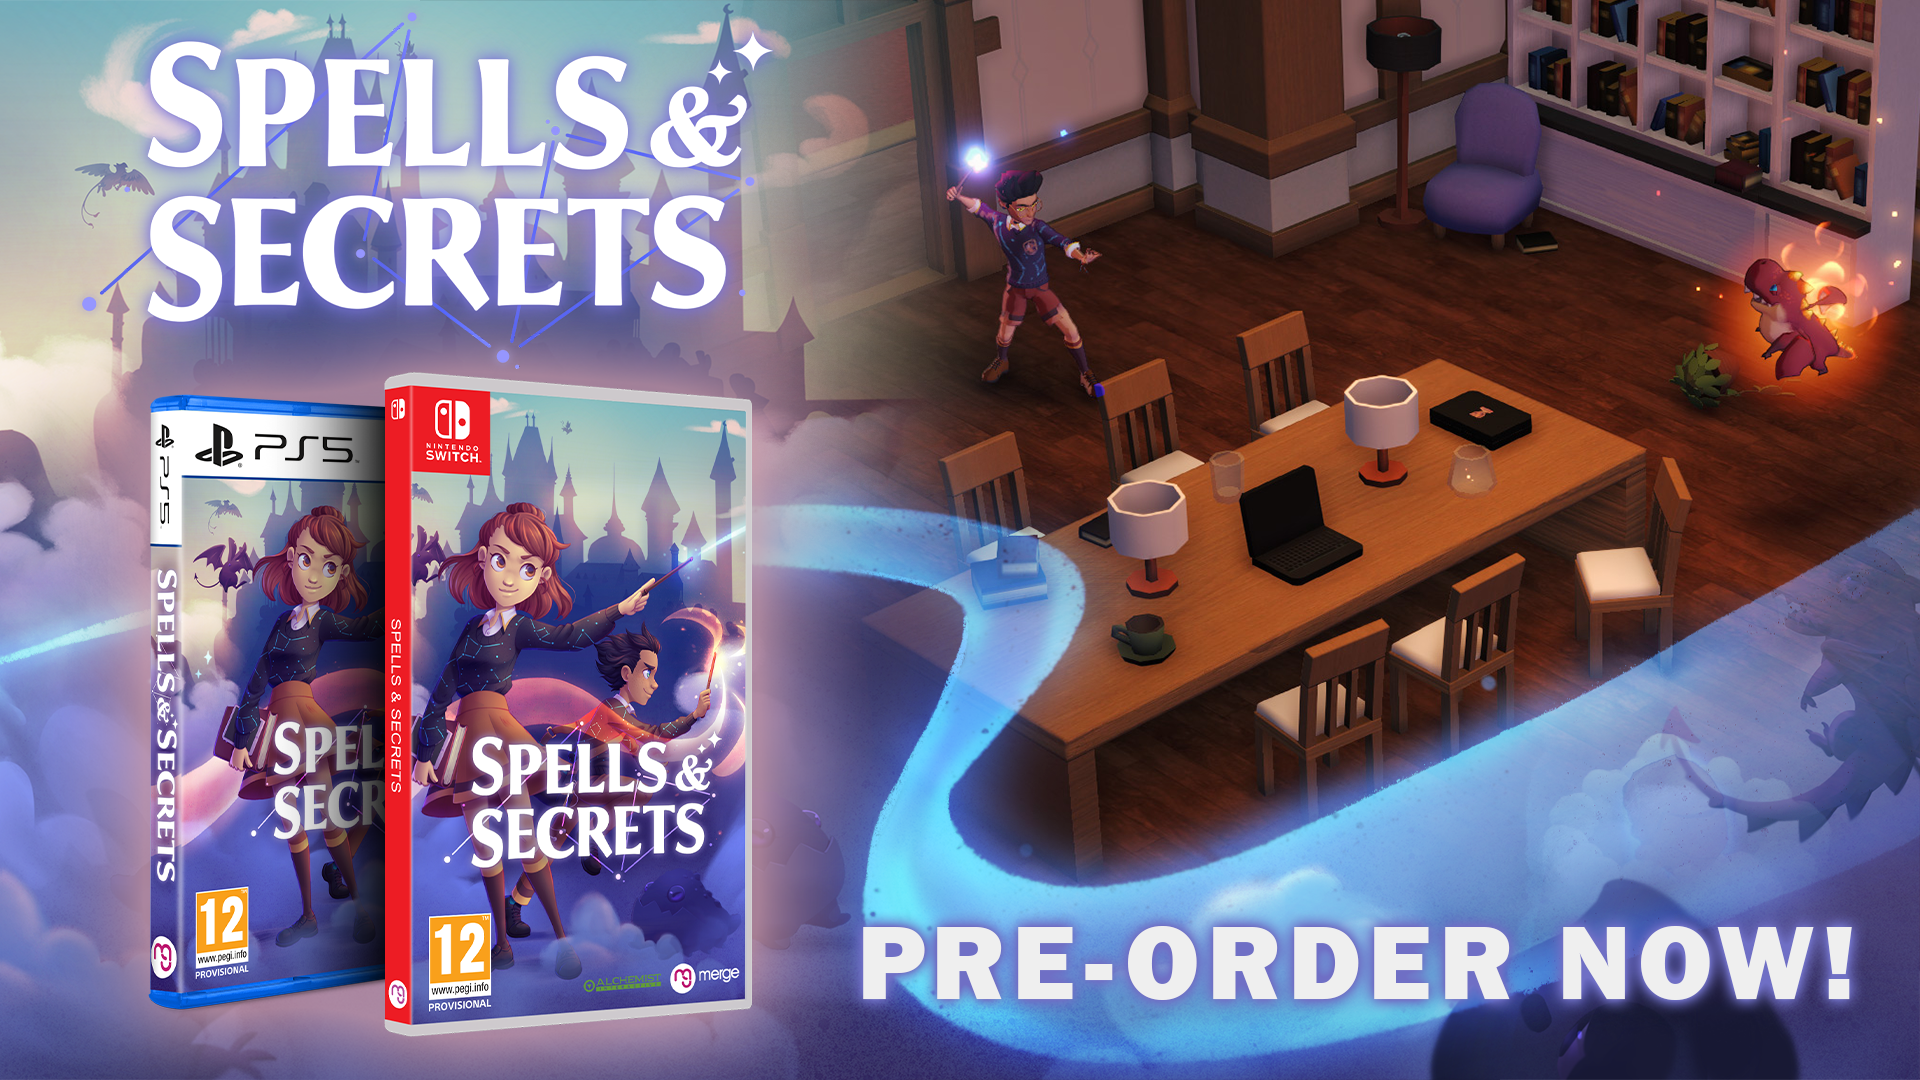 Pre-order Spells & Secrets